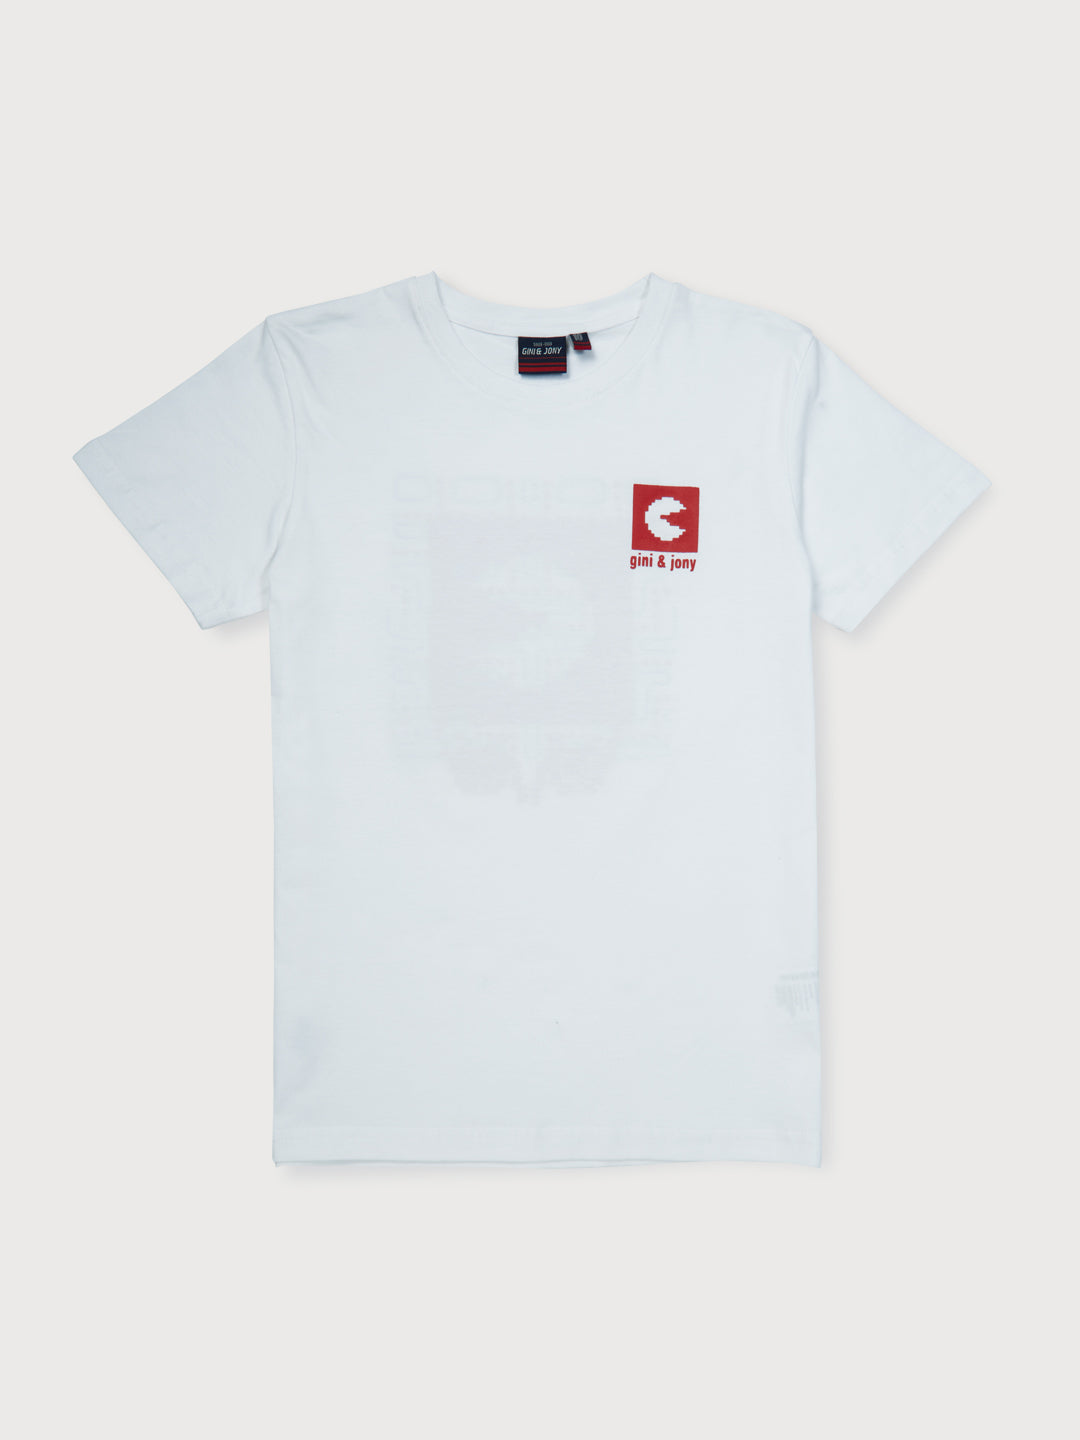 Boys White Printed Knits T-Shirt